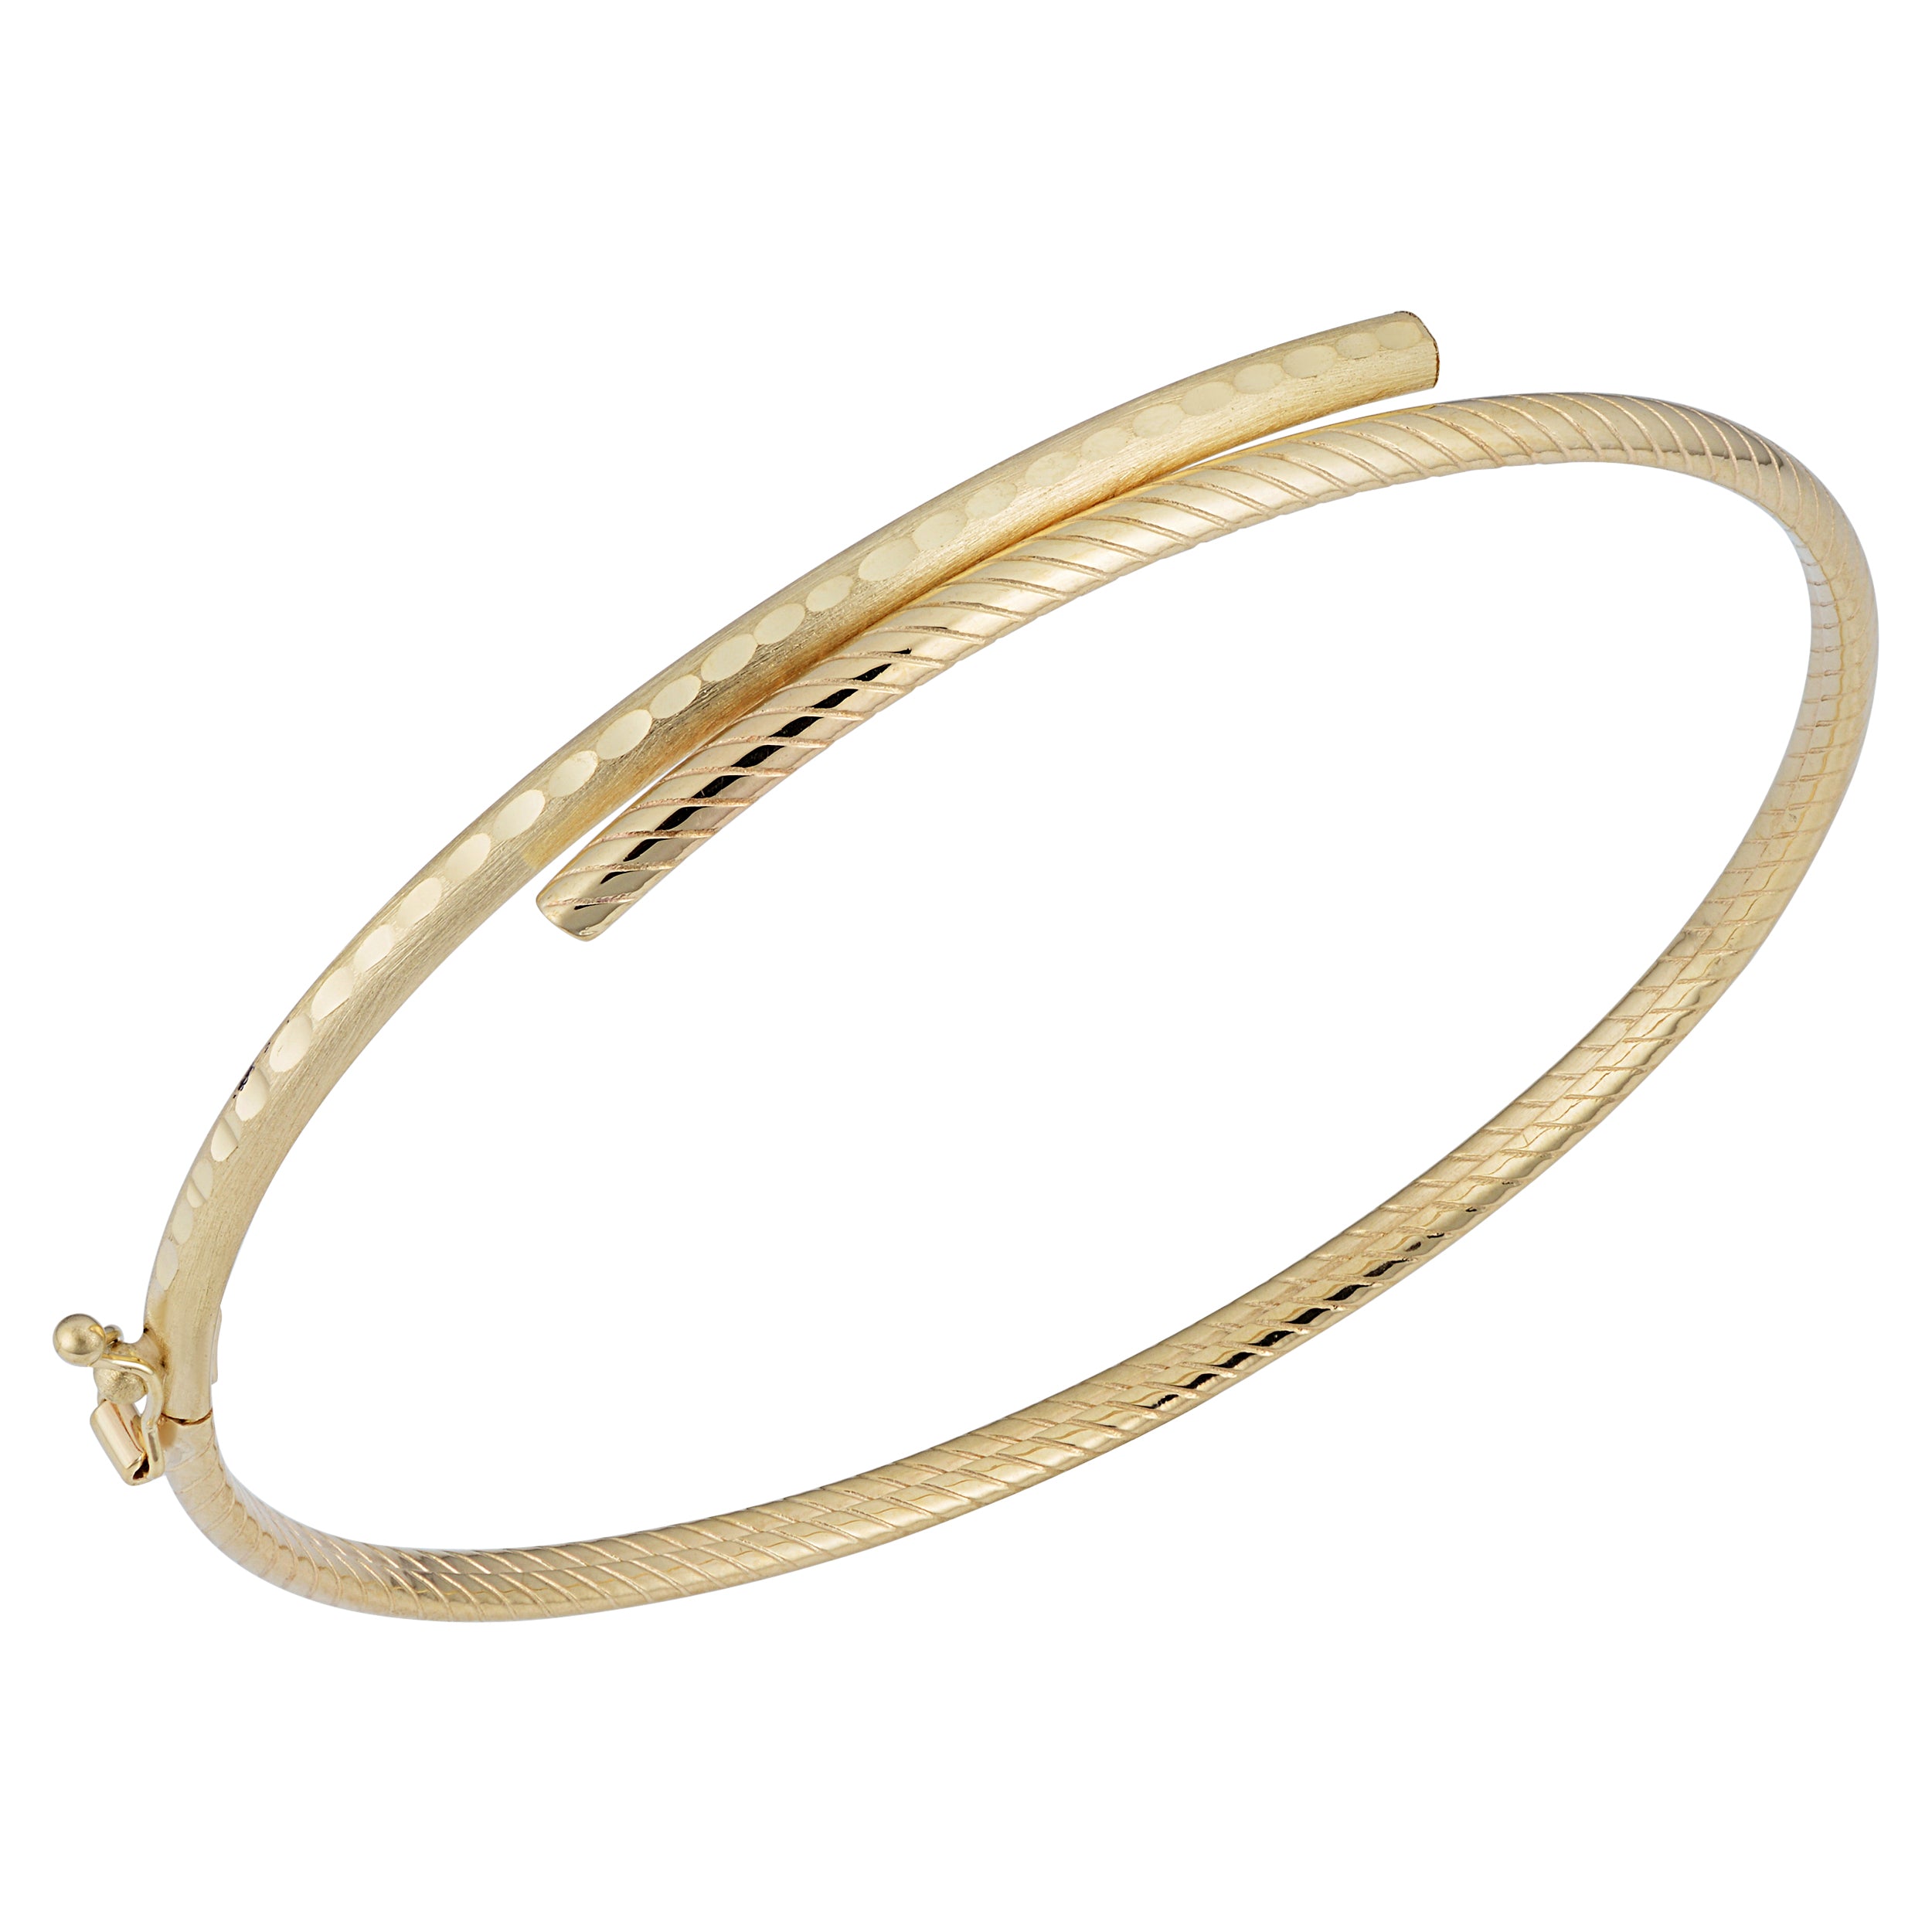 14k Yellow Gold Bypass Women's Bangle Bracelet, 7.5" fine designer jewelry for men and women